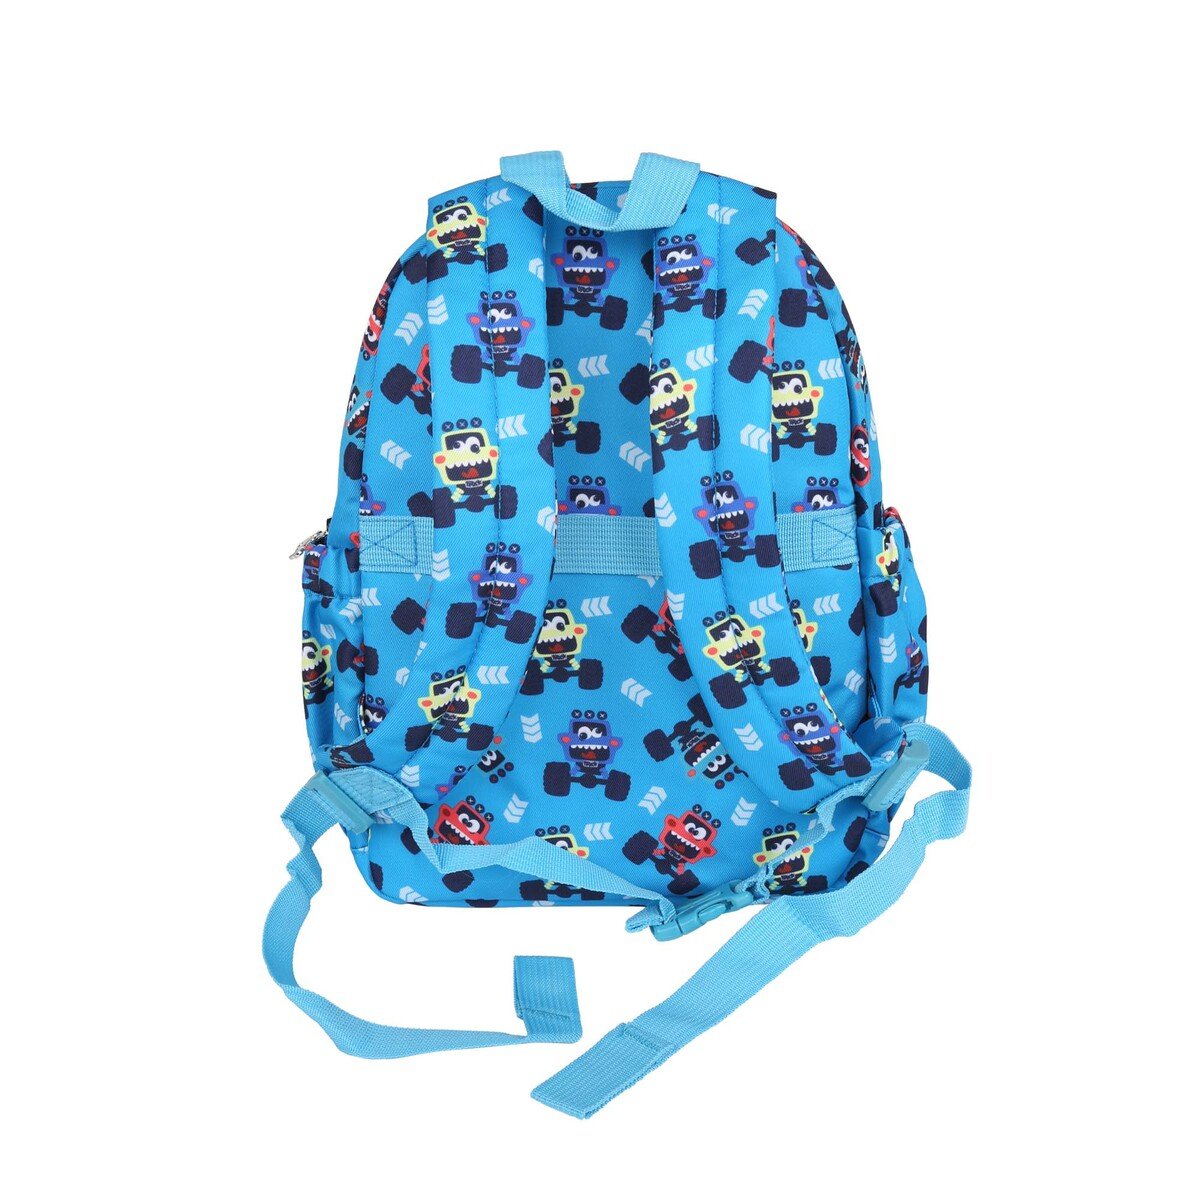 Eten Elementary Backpack 90074 12inch Assorted